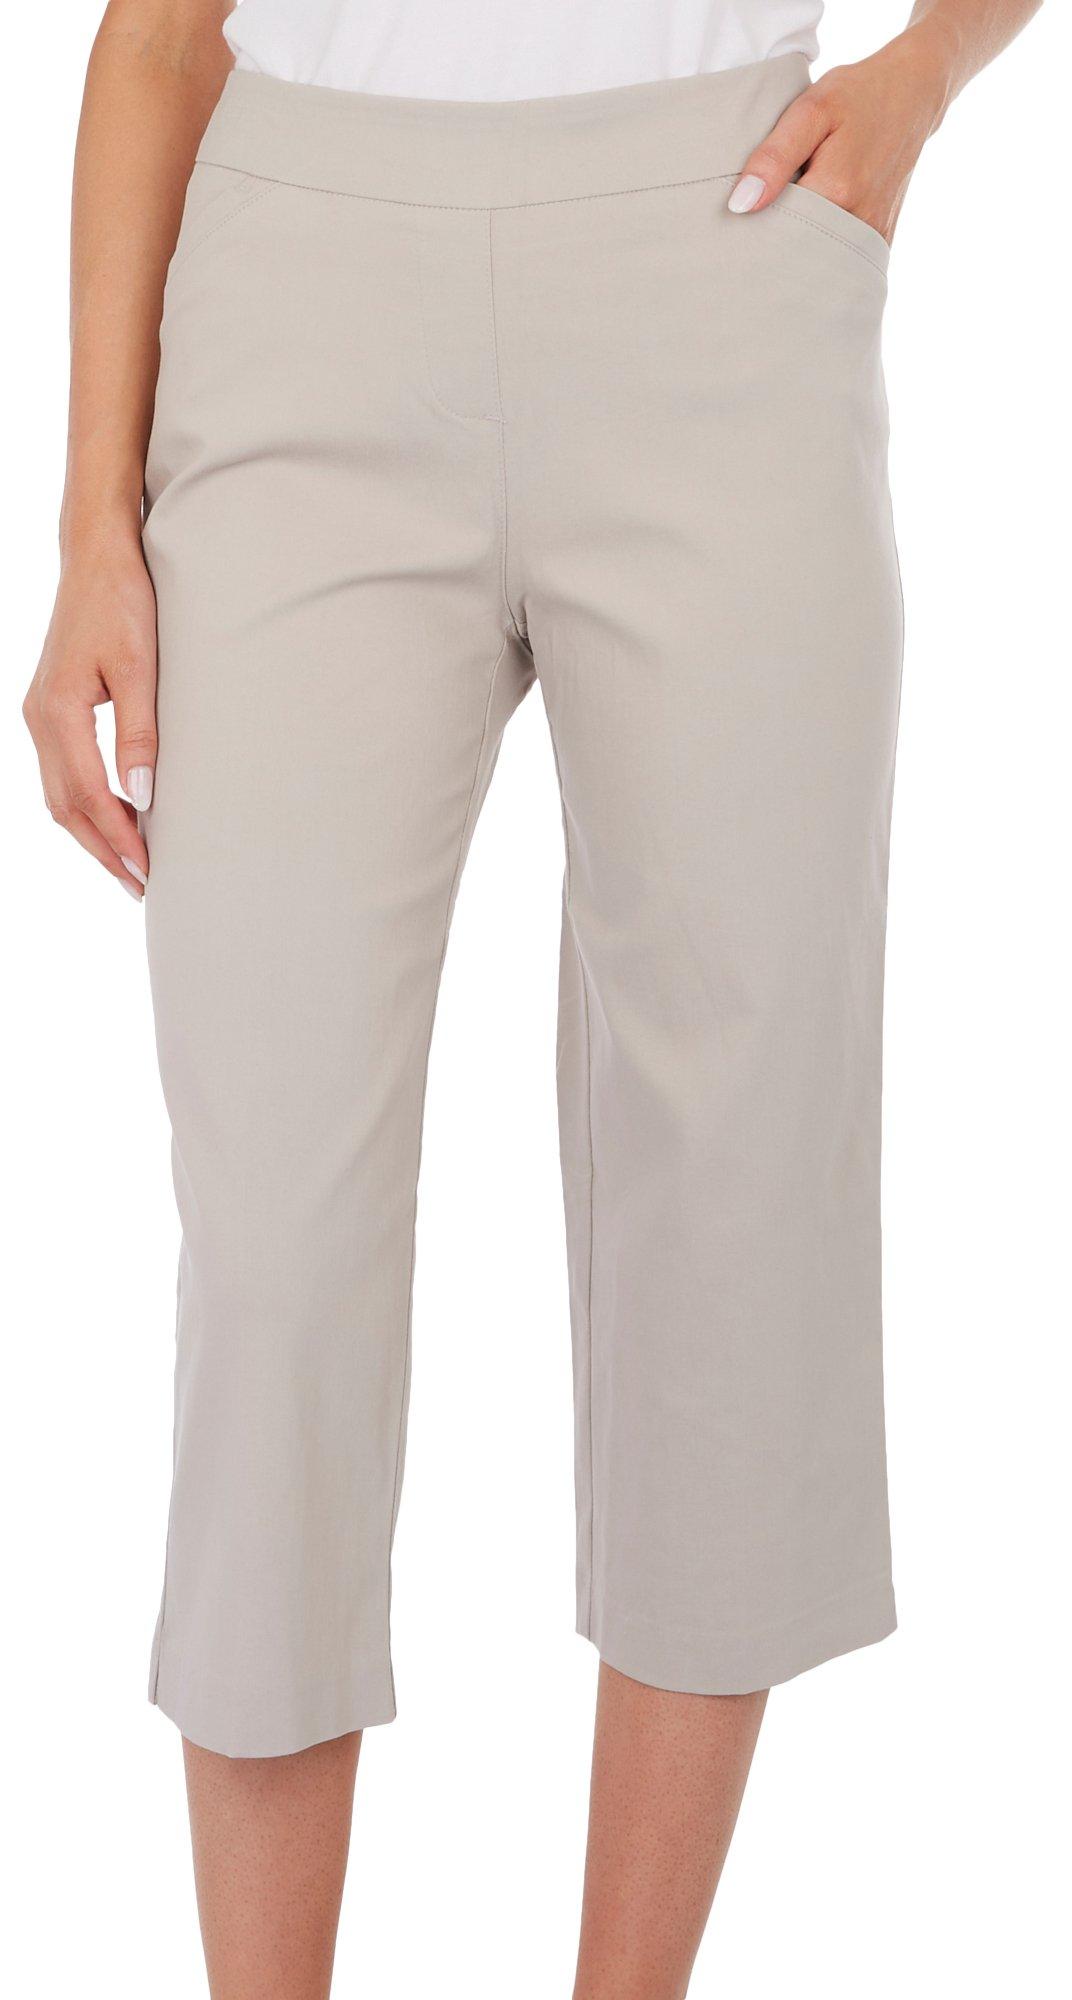 Real Size Women's Pull On Grommet Stretch Capri Pants, 17